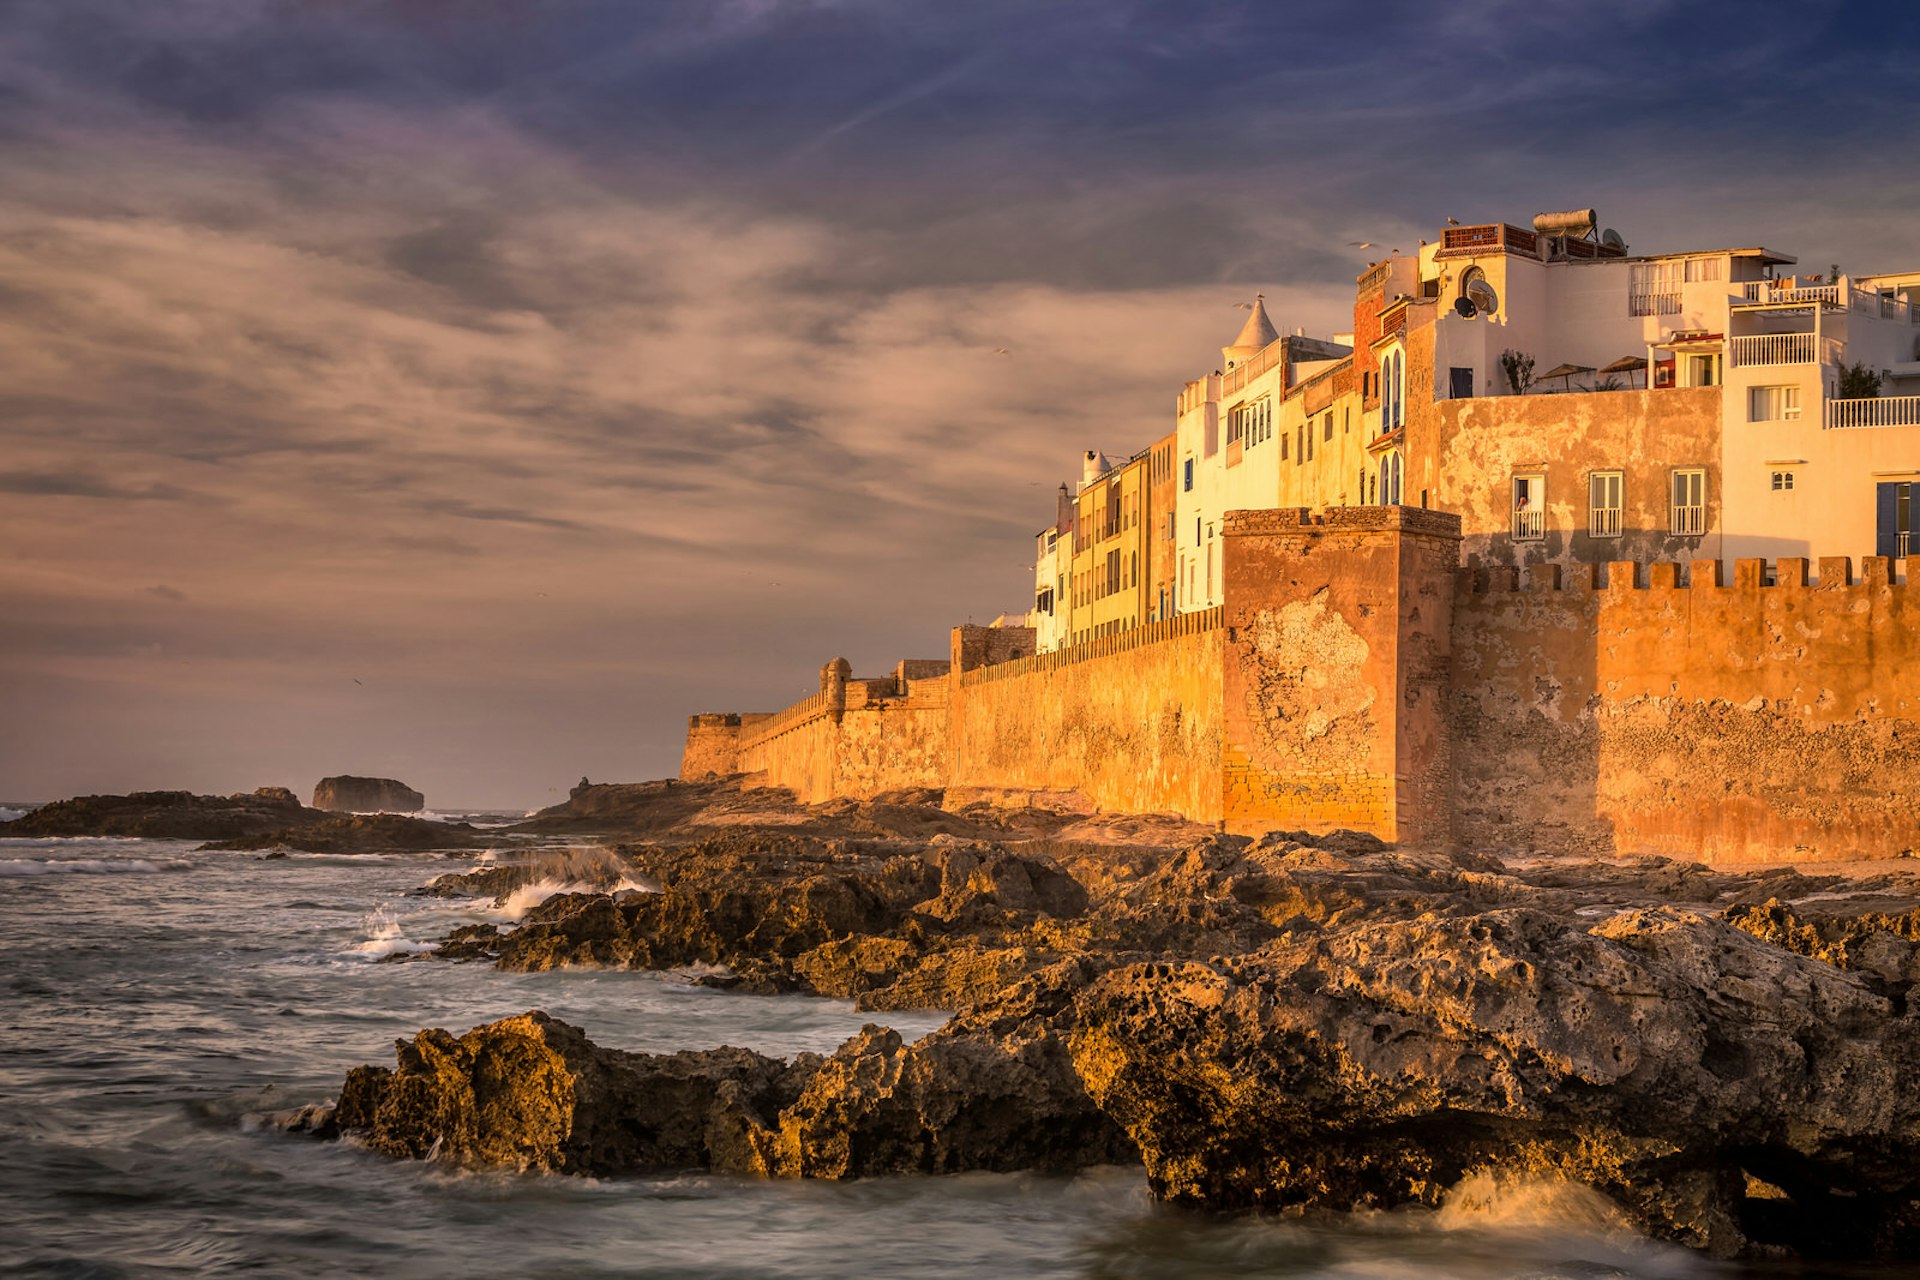 Essaouira's fortified old city. Image by Ruslan Kalnitsky / Shutterstock